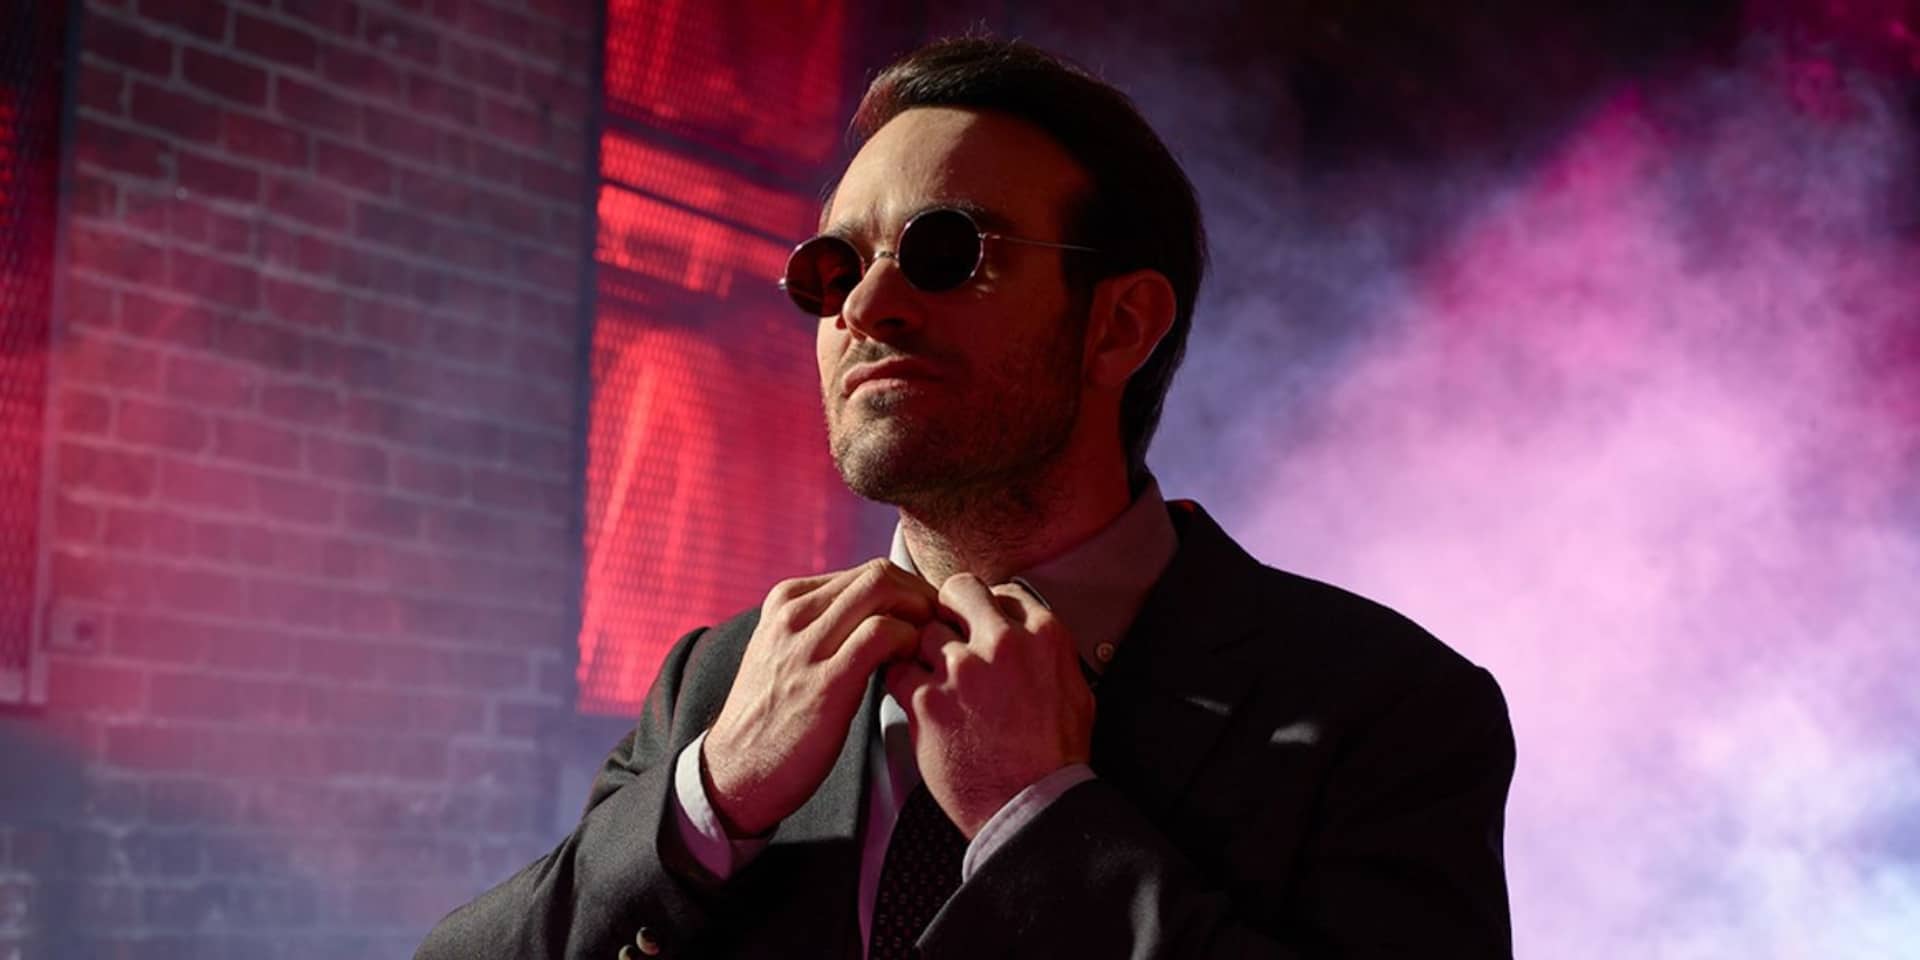 Charlie-Cox-as-Matt-Murdock-aka-Daredevil-in-The-Defenders-from-GamersRD (1)